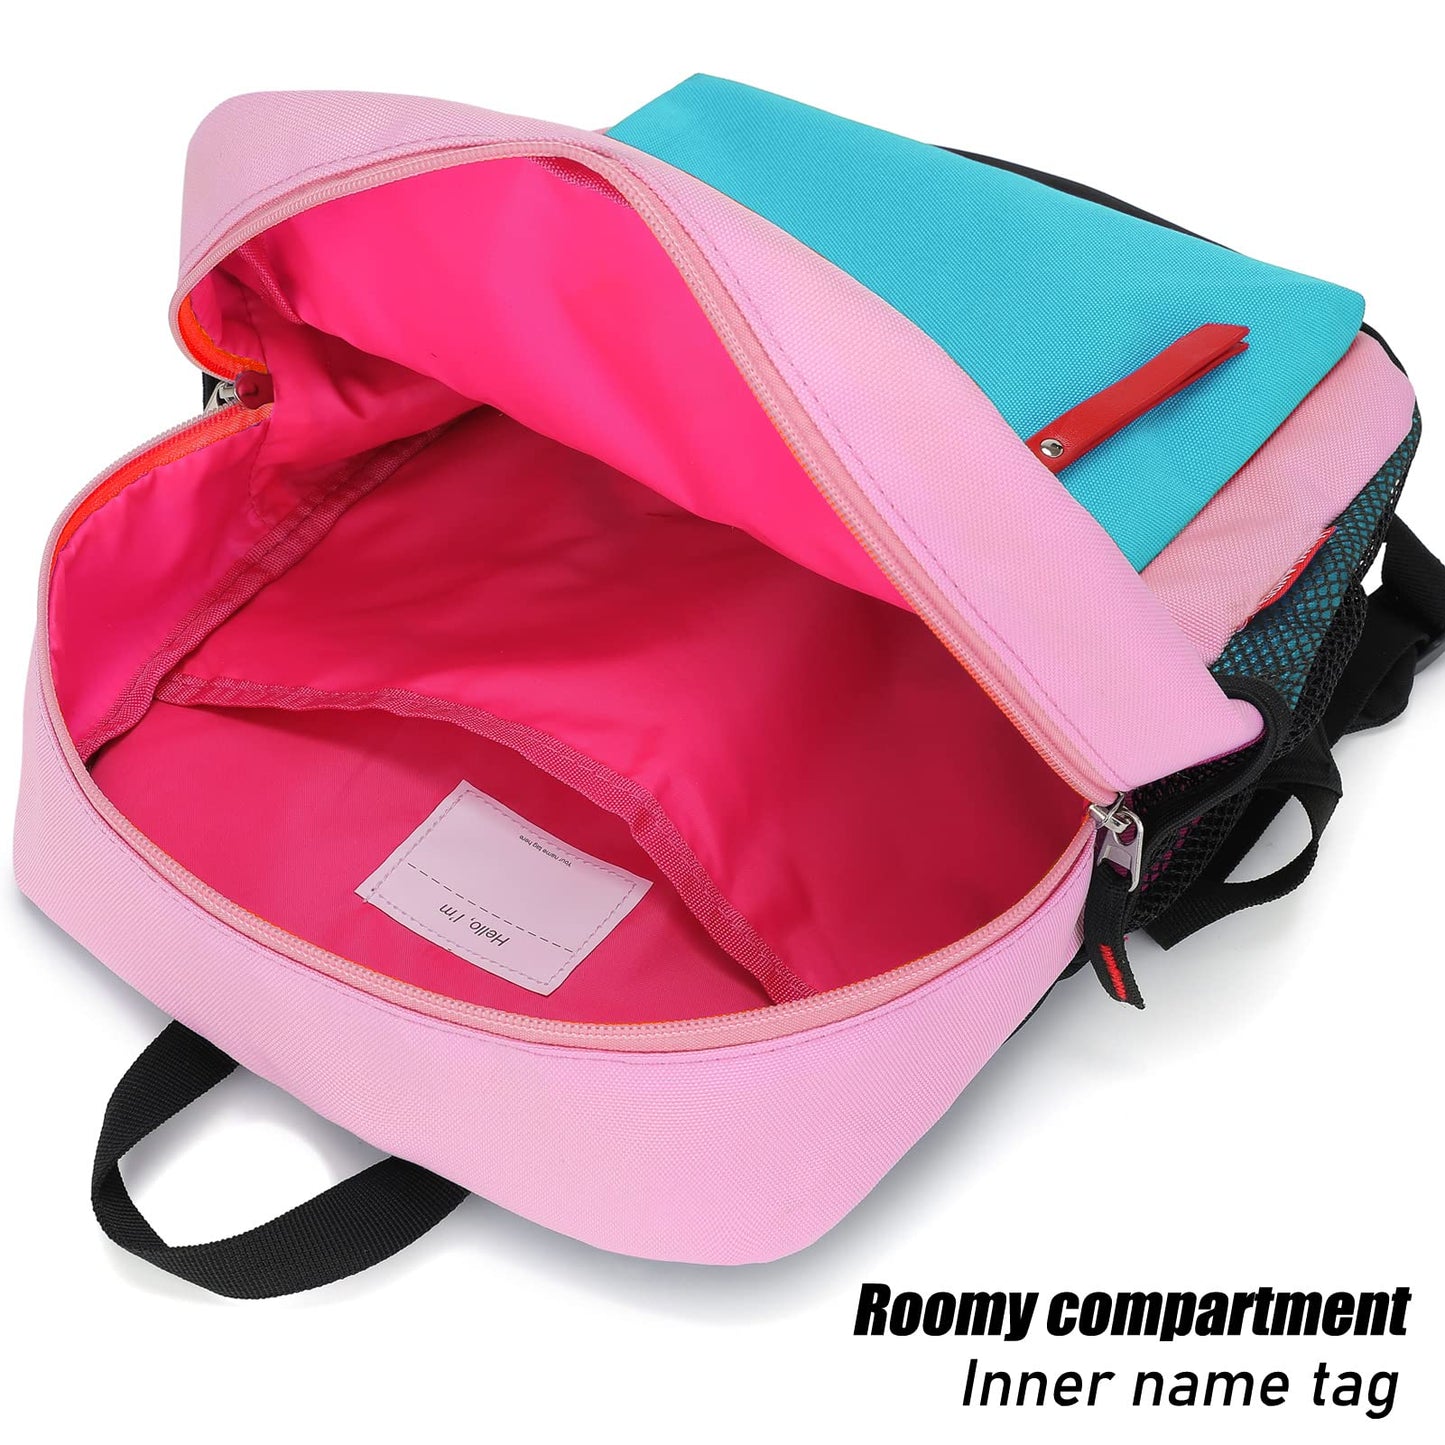 HawLander Preschool Backpack for Toddler Girls, Kids School Bag, Ages 3 to 7 years old